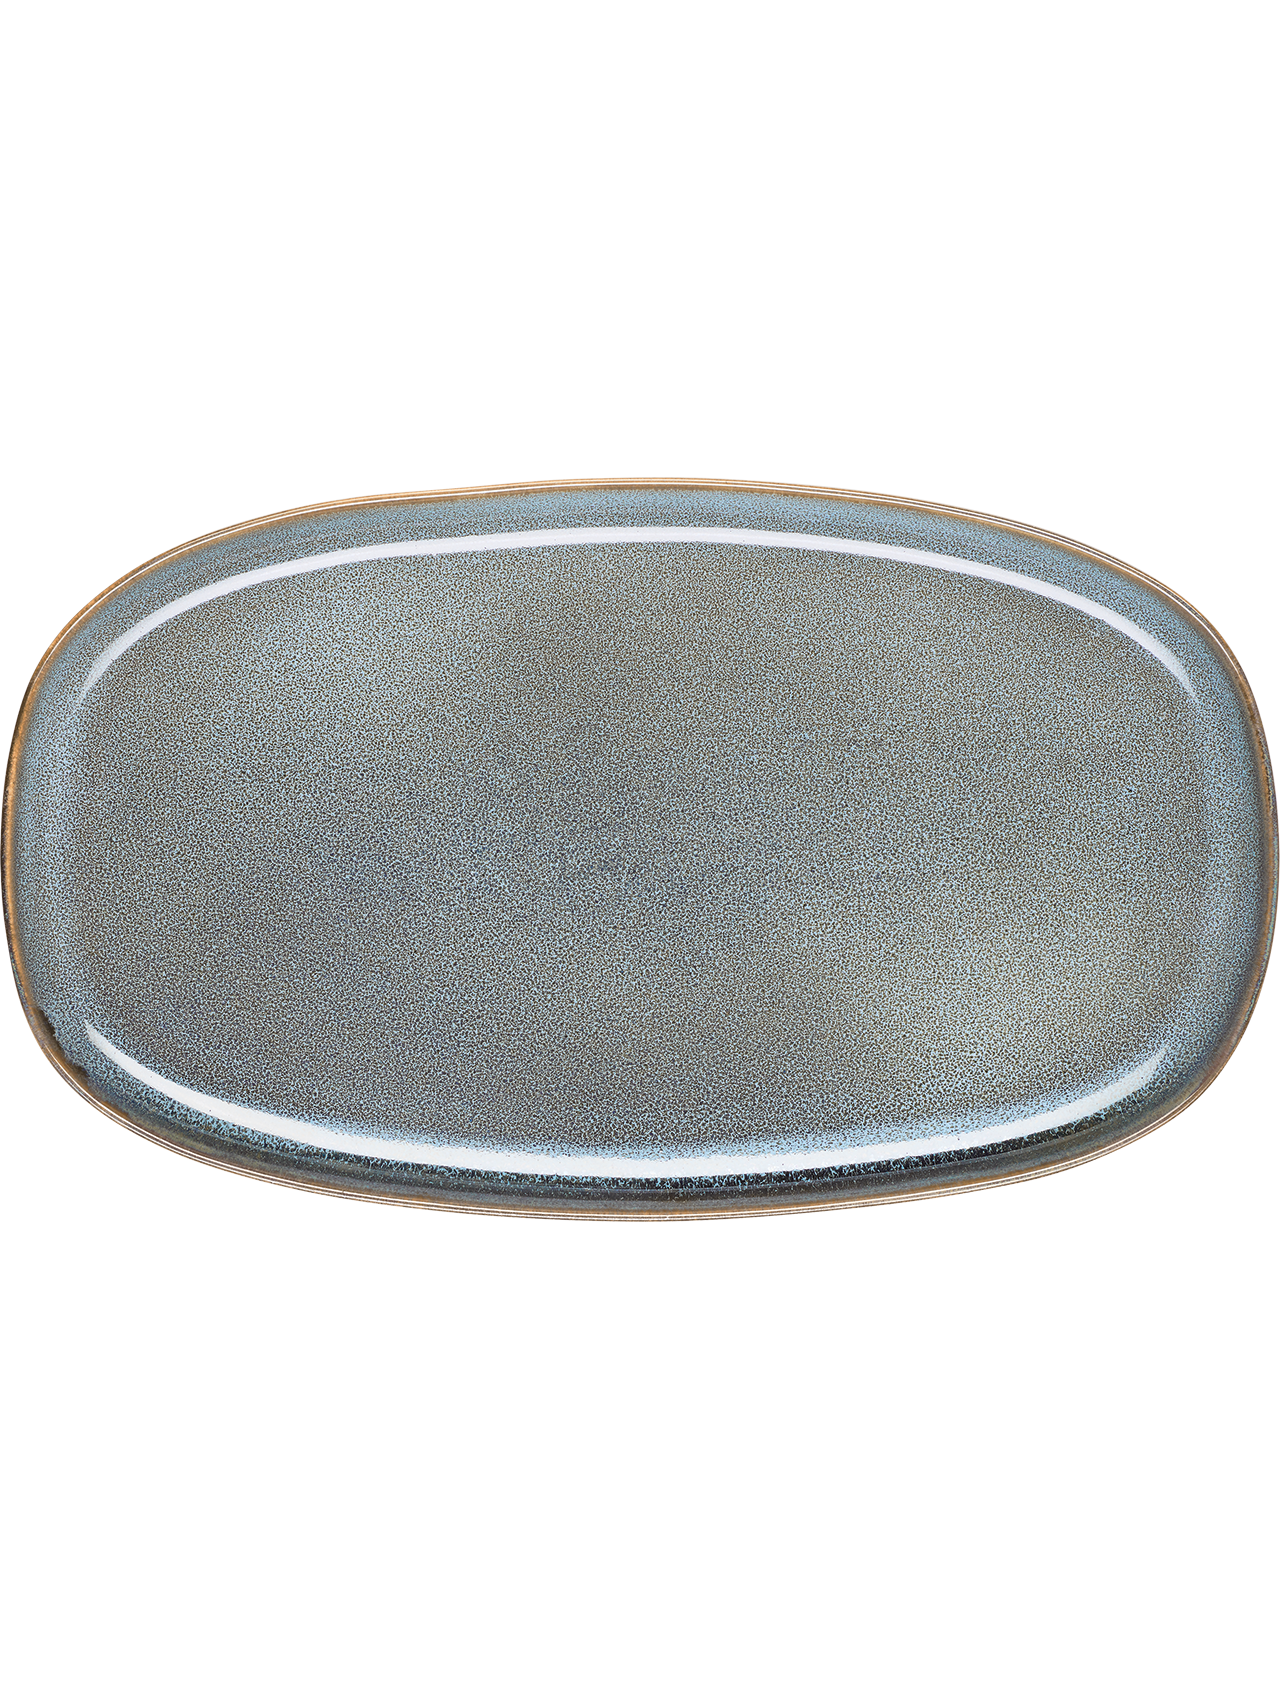 Platte, oval, denim 31 x 18 cm, H. 2 cm  